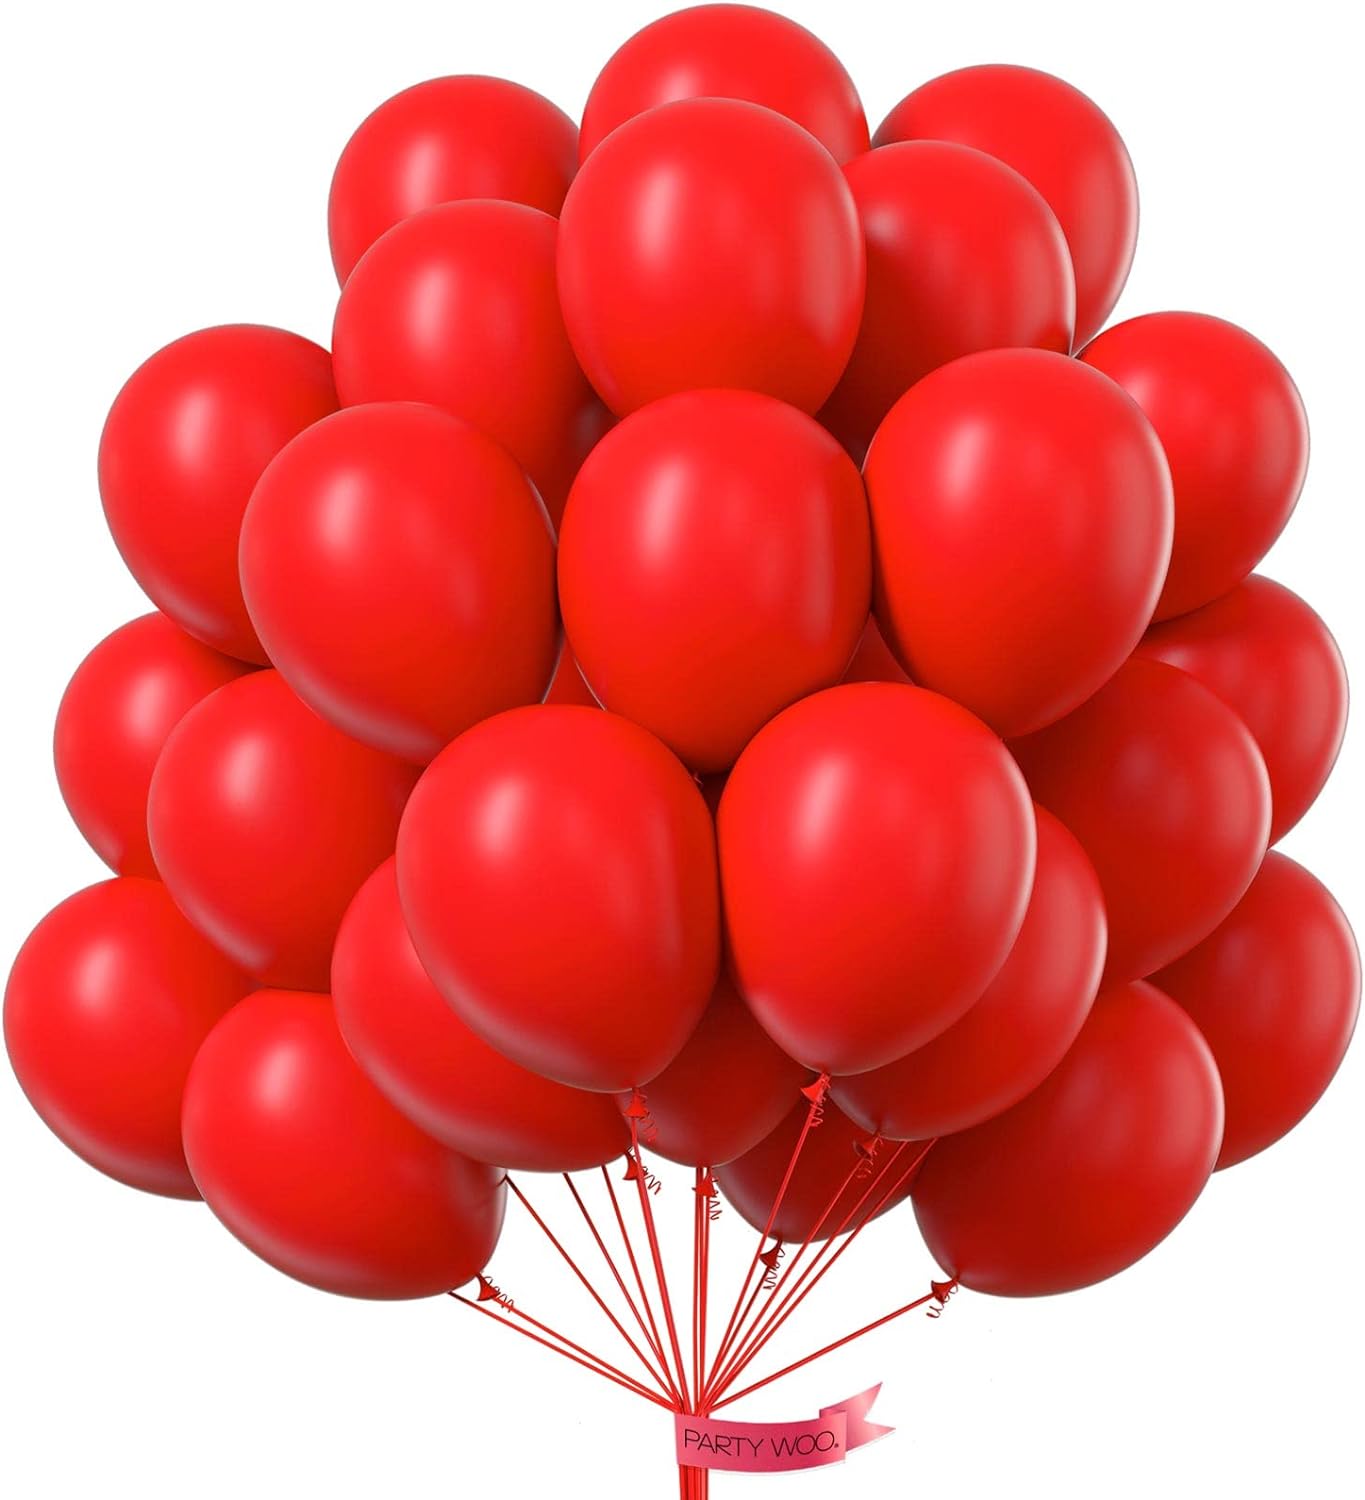 10 Inch Standard Balloons